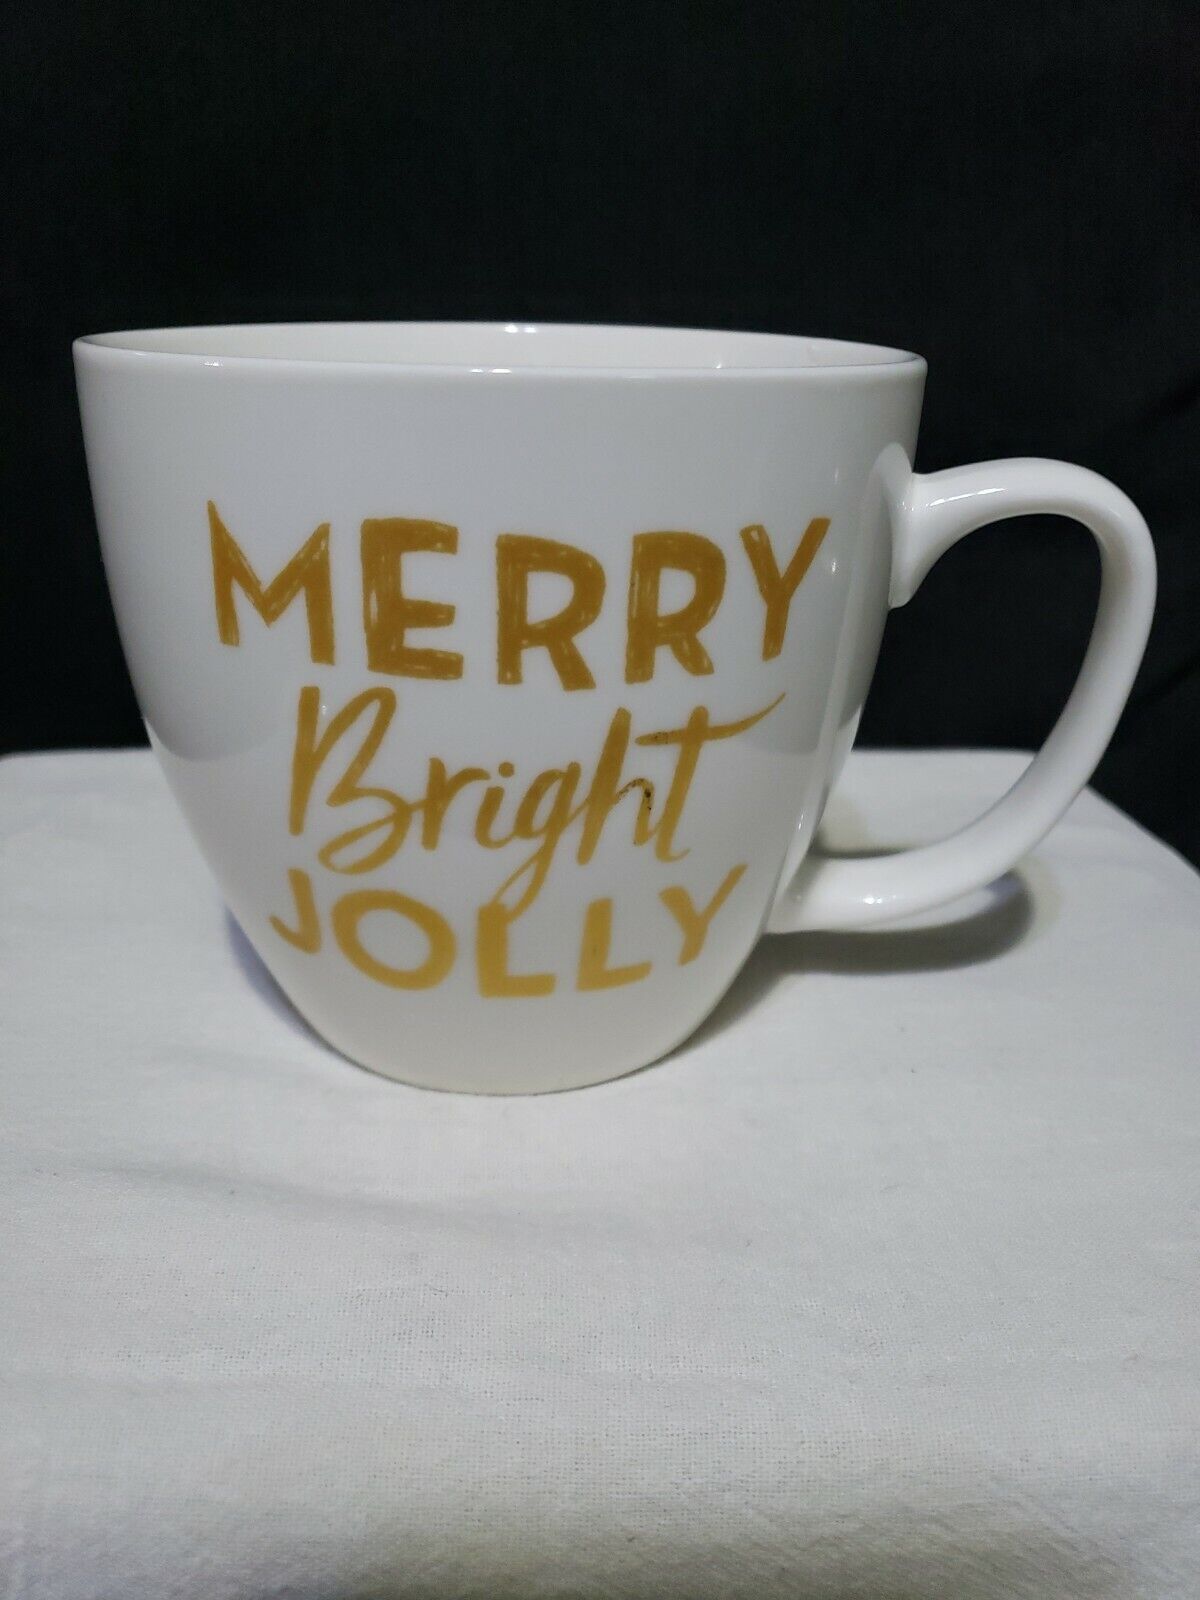 Starbucks MERRY BRIGHT JOLLY Christmas Holiday 20oz Coffee/Tea Mug - 2016